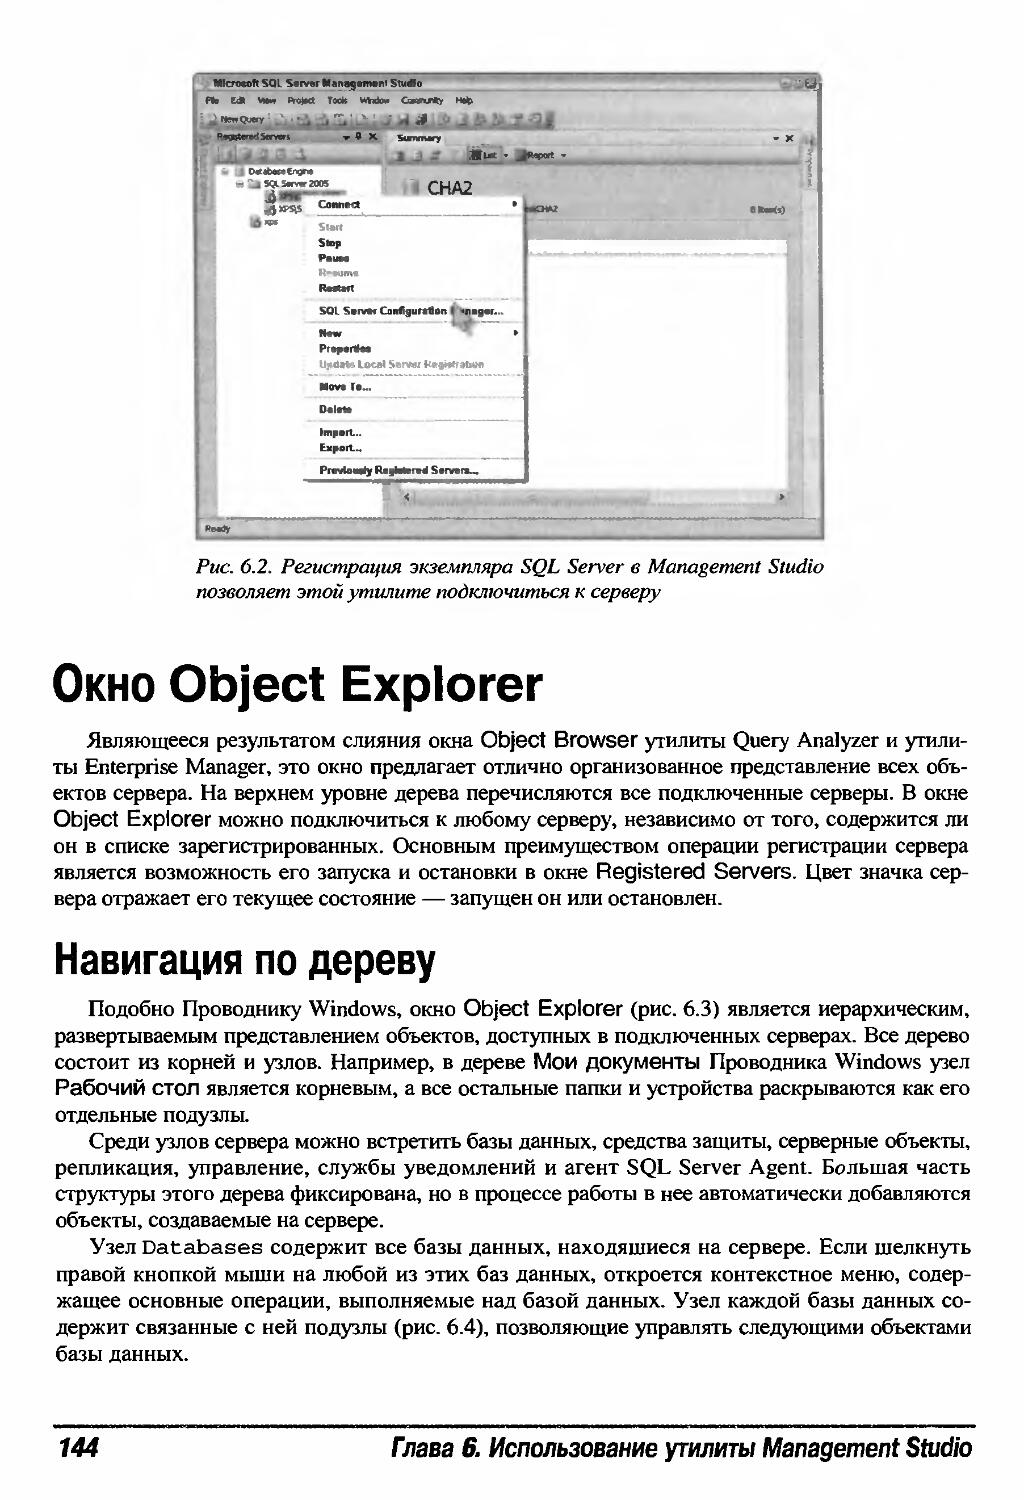 Окно Object Explorer